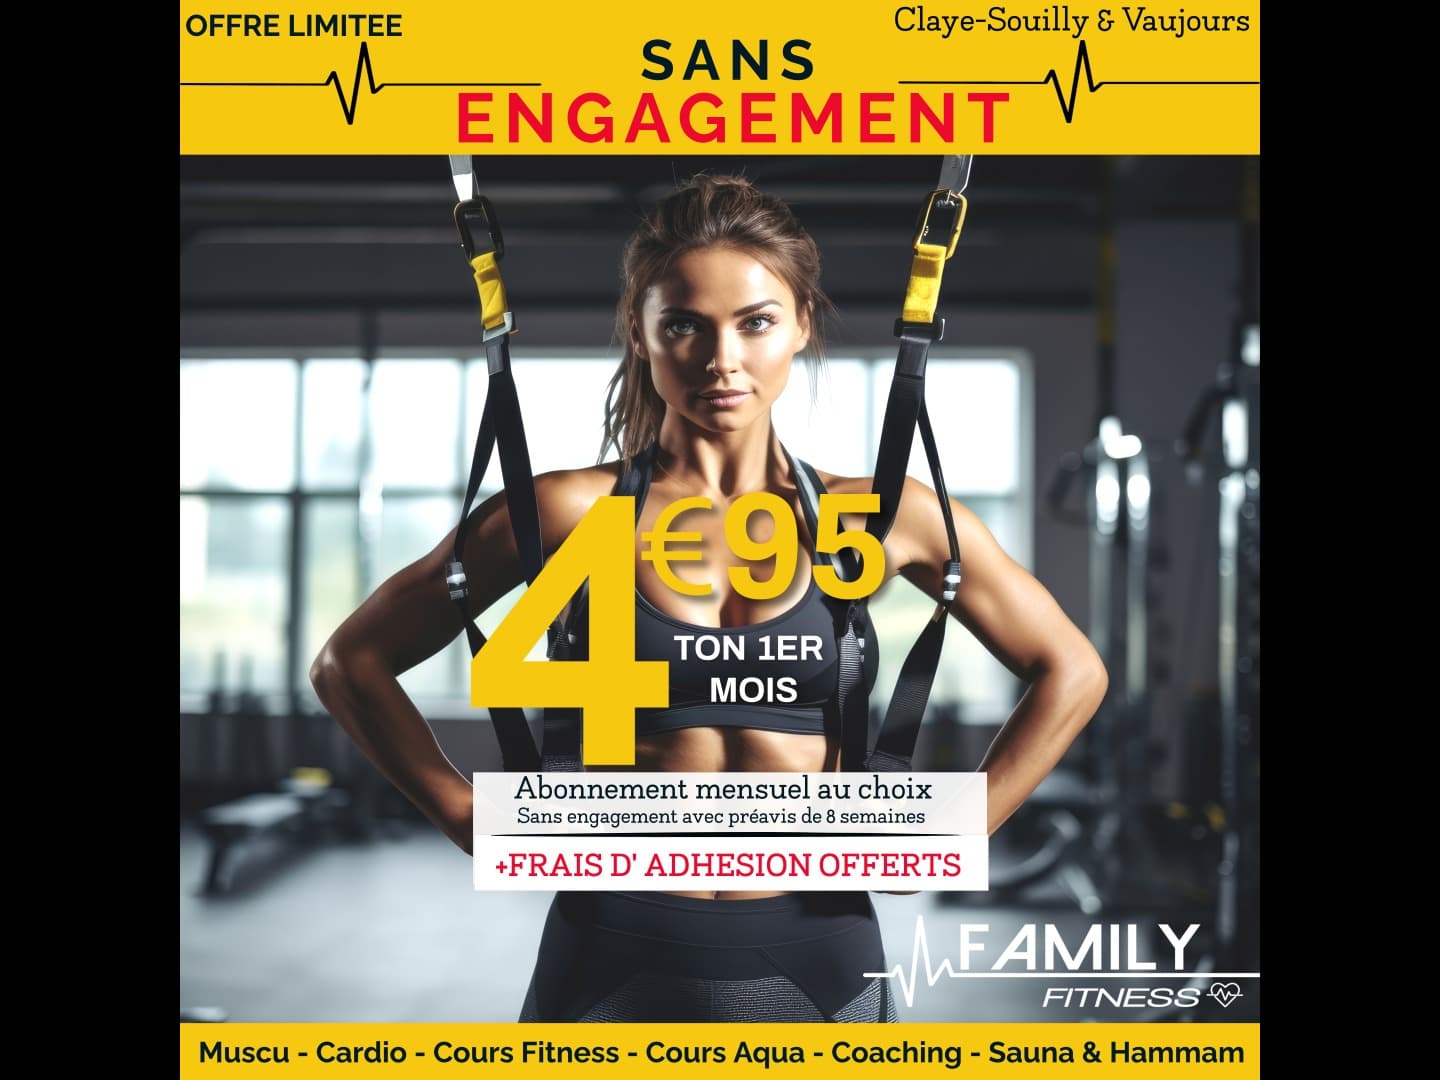 Family Fitness Vaujours